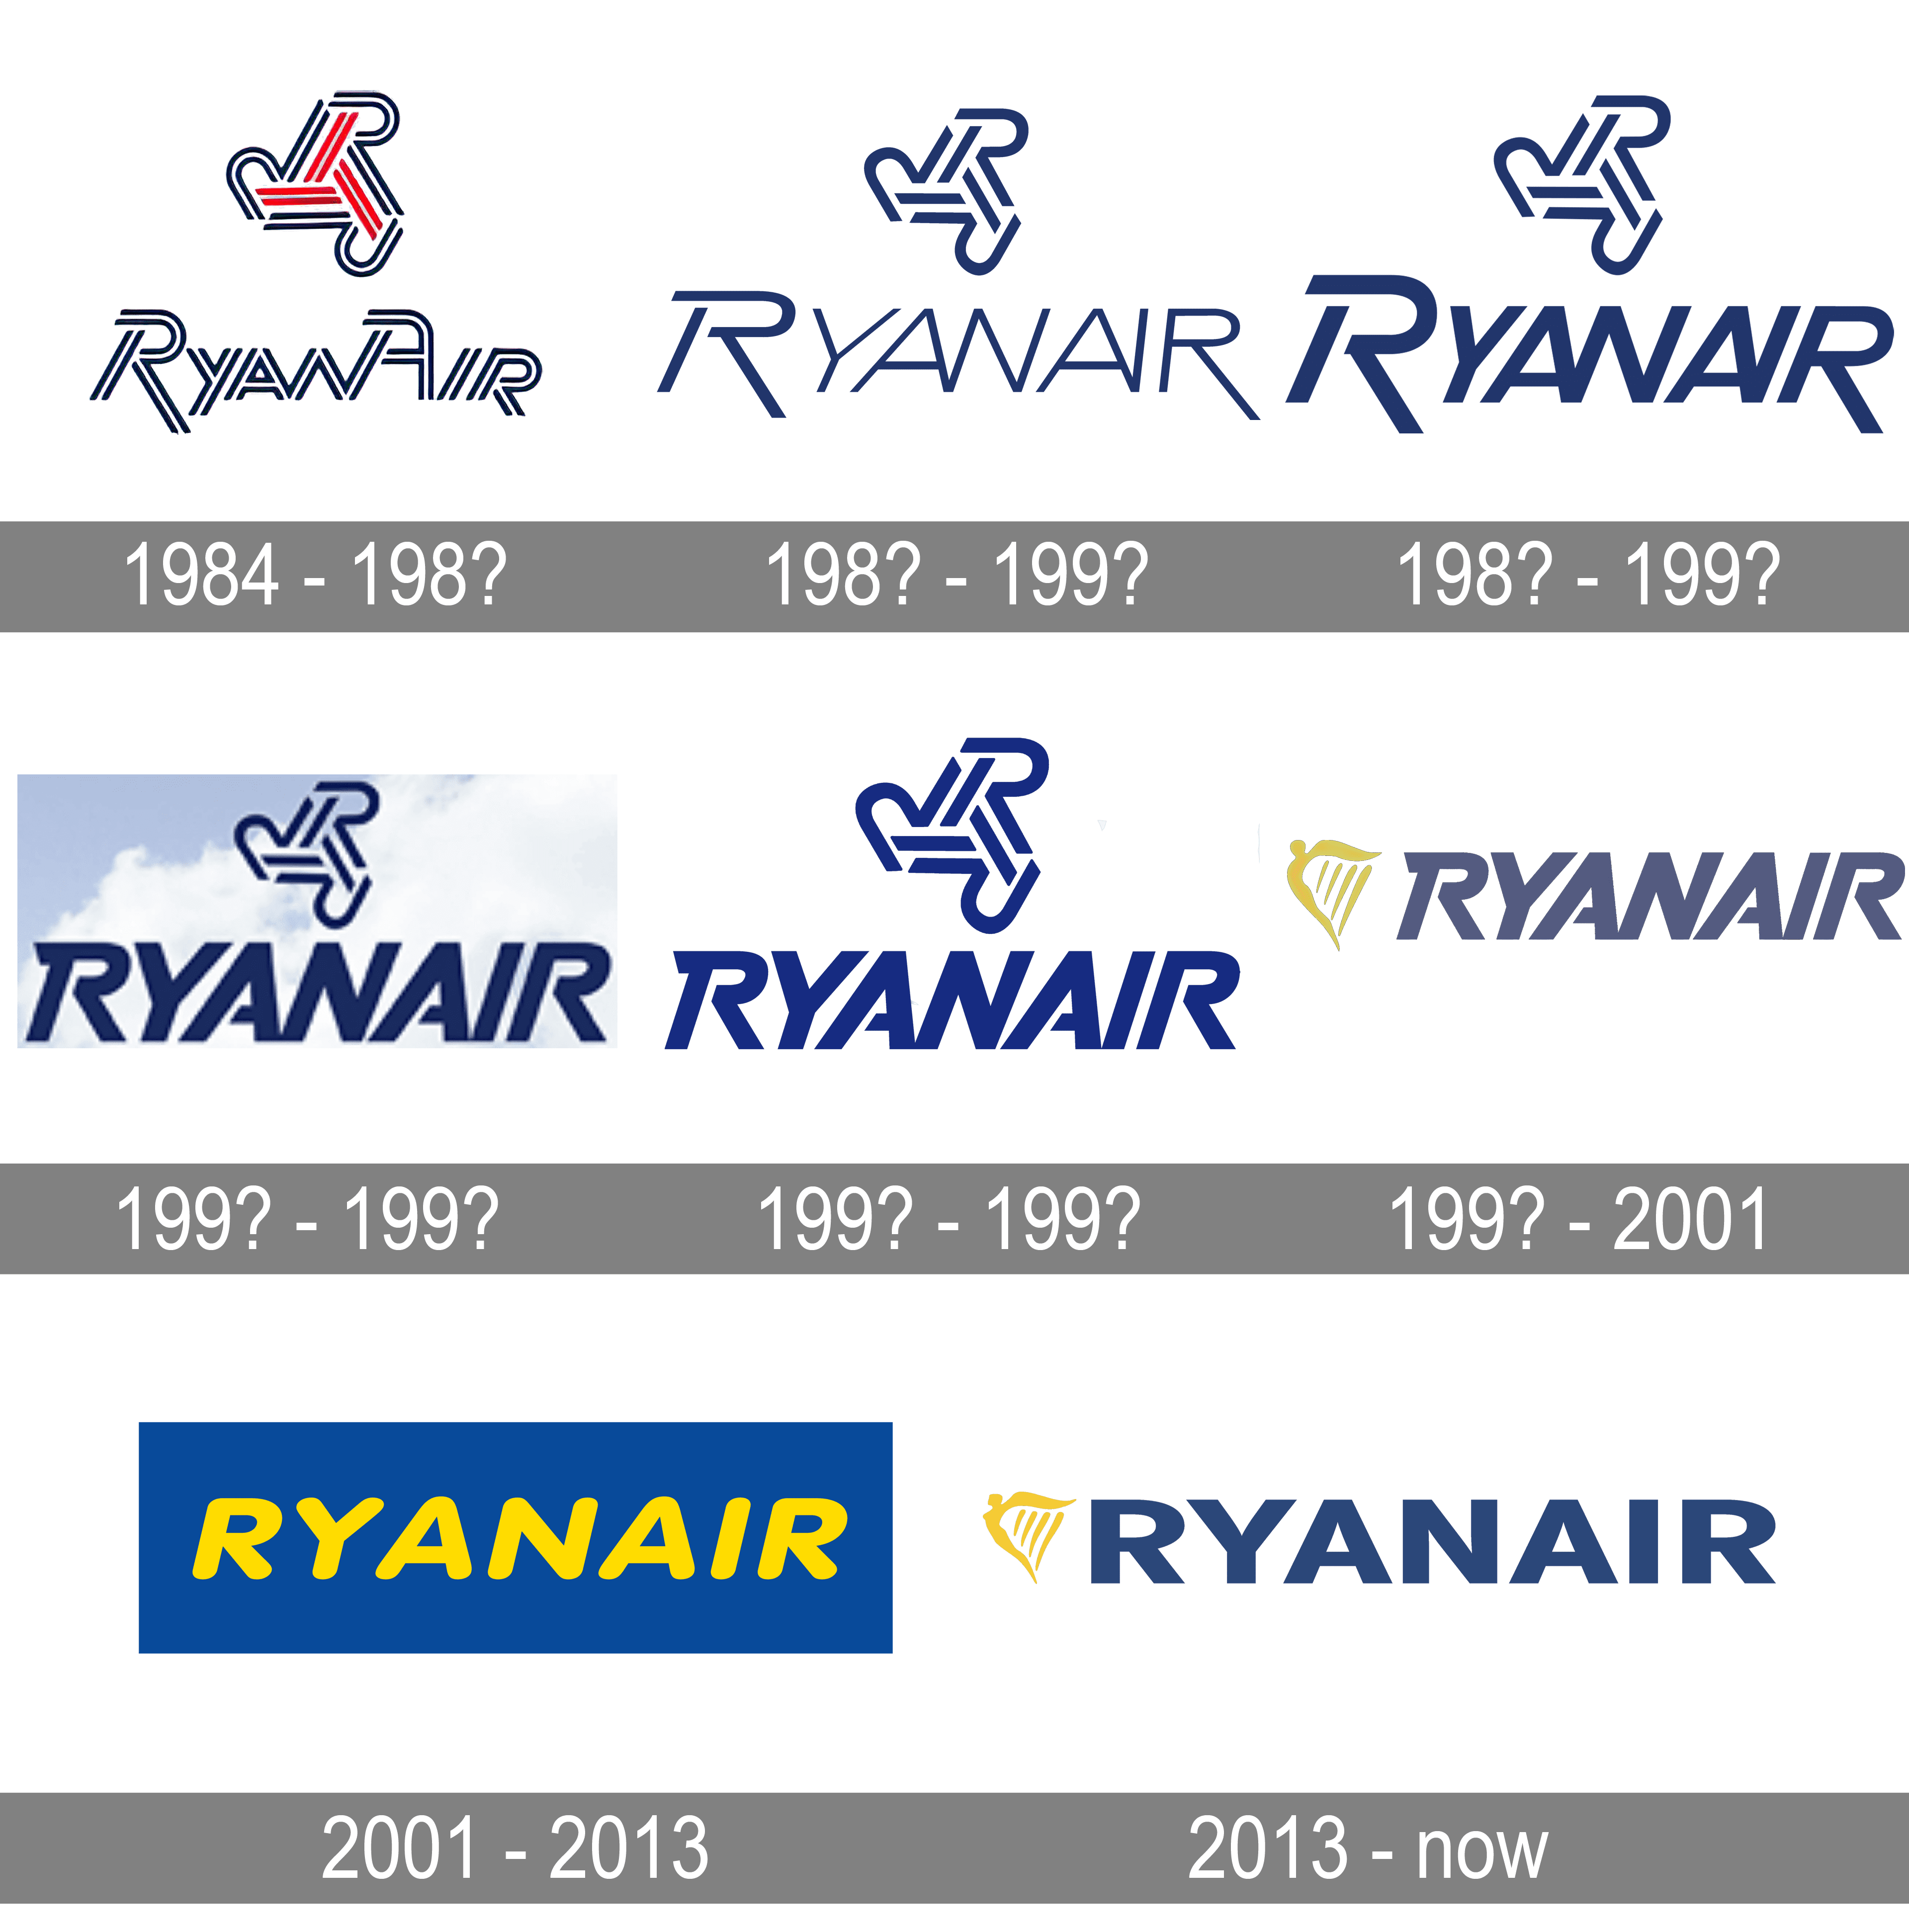 ryanair official logo